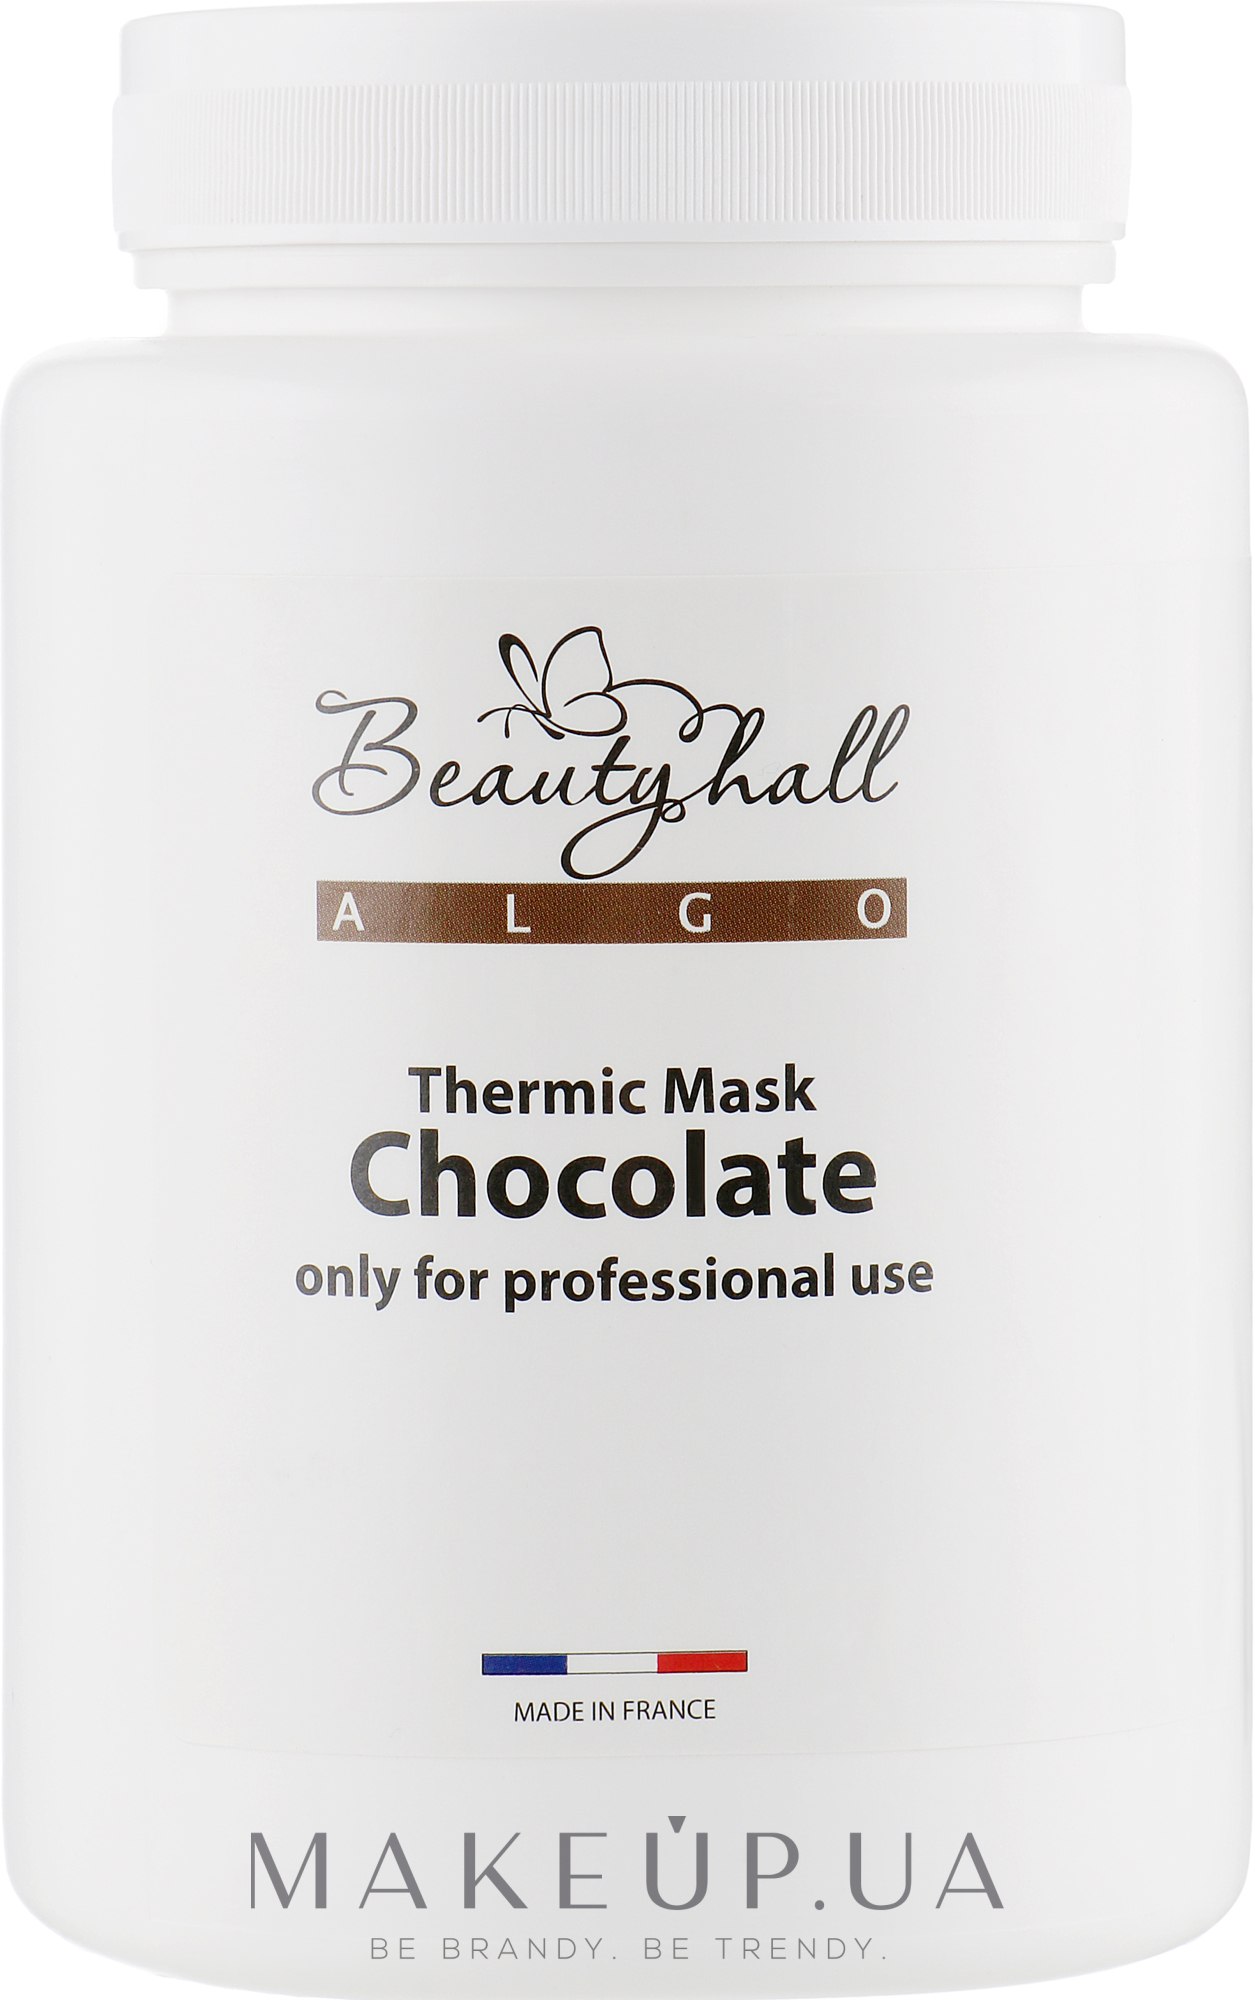 Гіпсова термомоделювальна маска "Шоколад" - Beautyhall Algo Thermic Mask Chocolate — фото 200g